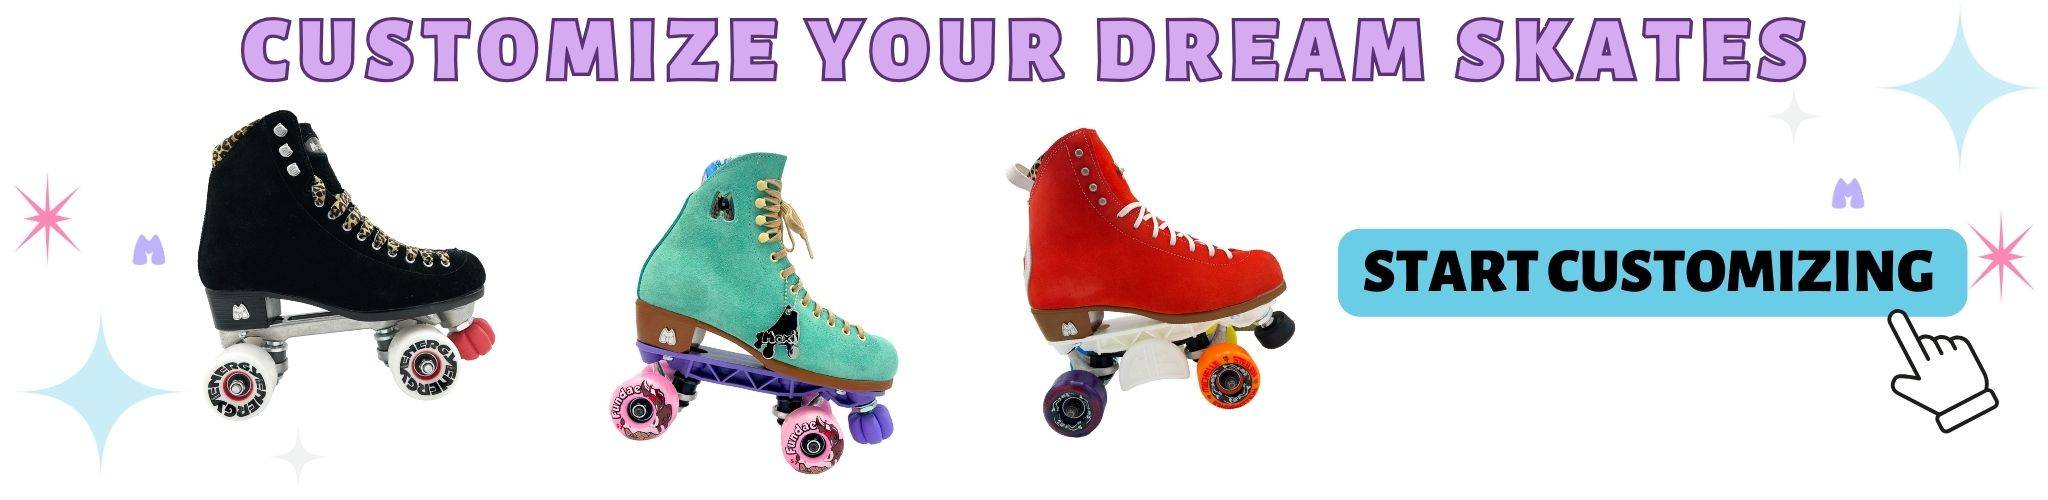 Customize your dream skates. Start customizing